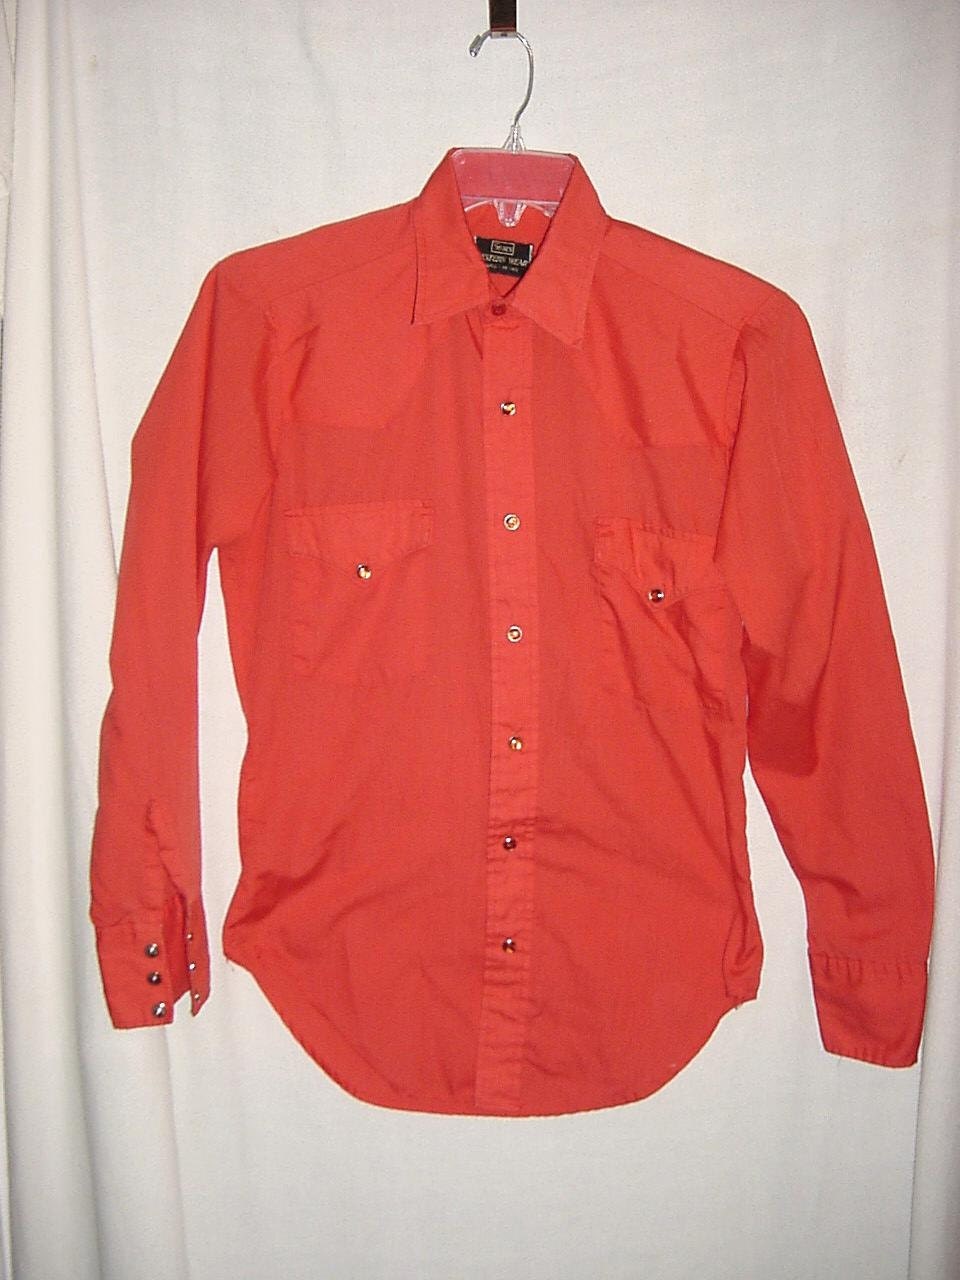 Vintage 70s Red Mens Western Wear Shirt by retroactivevintage